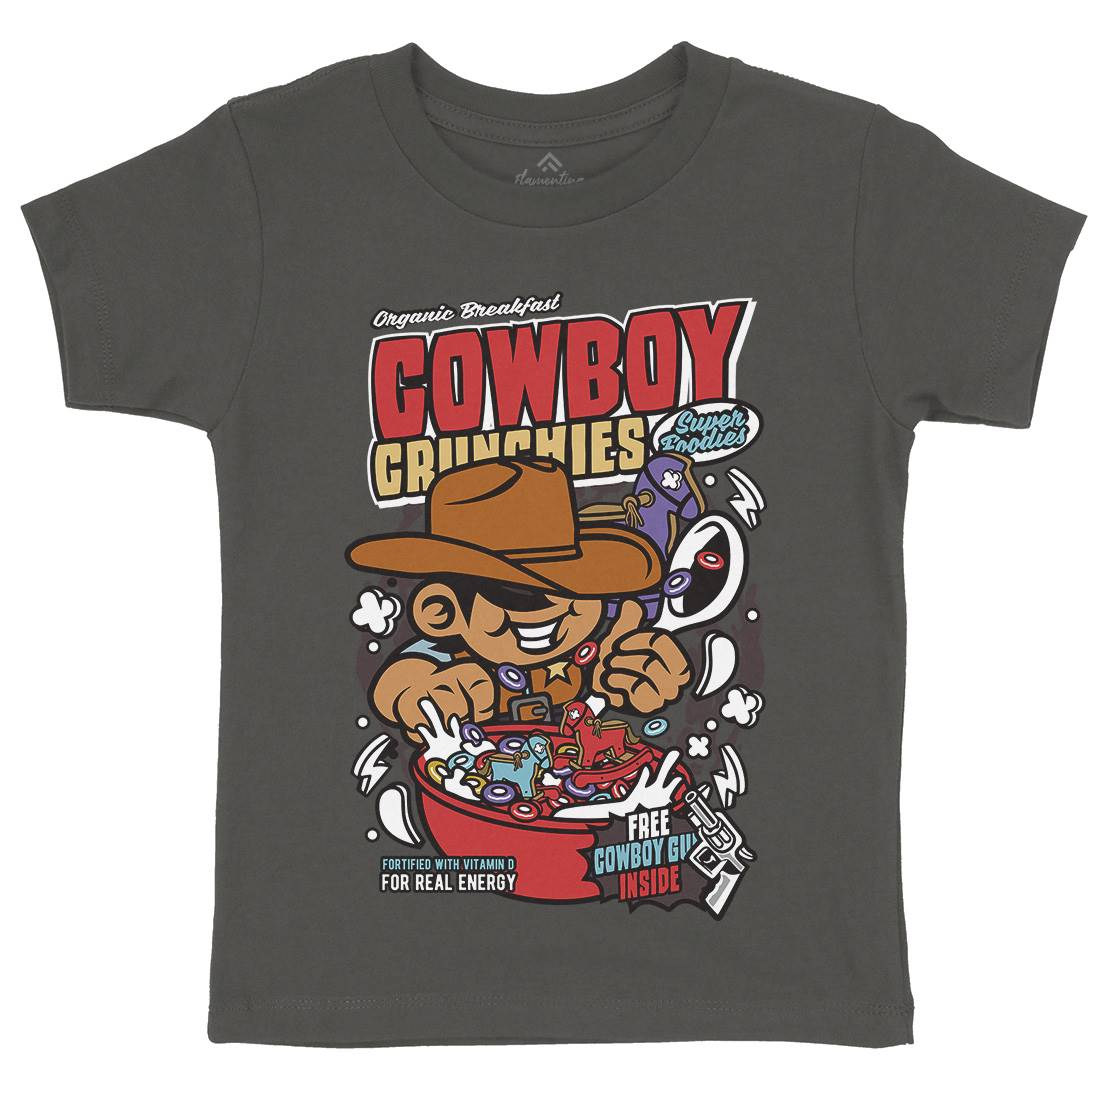 Cowboy Crunchies Kids Crew Neck T-Shirt Food C529